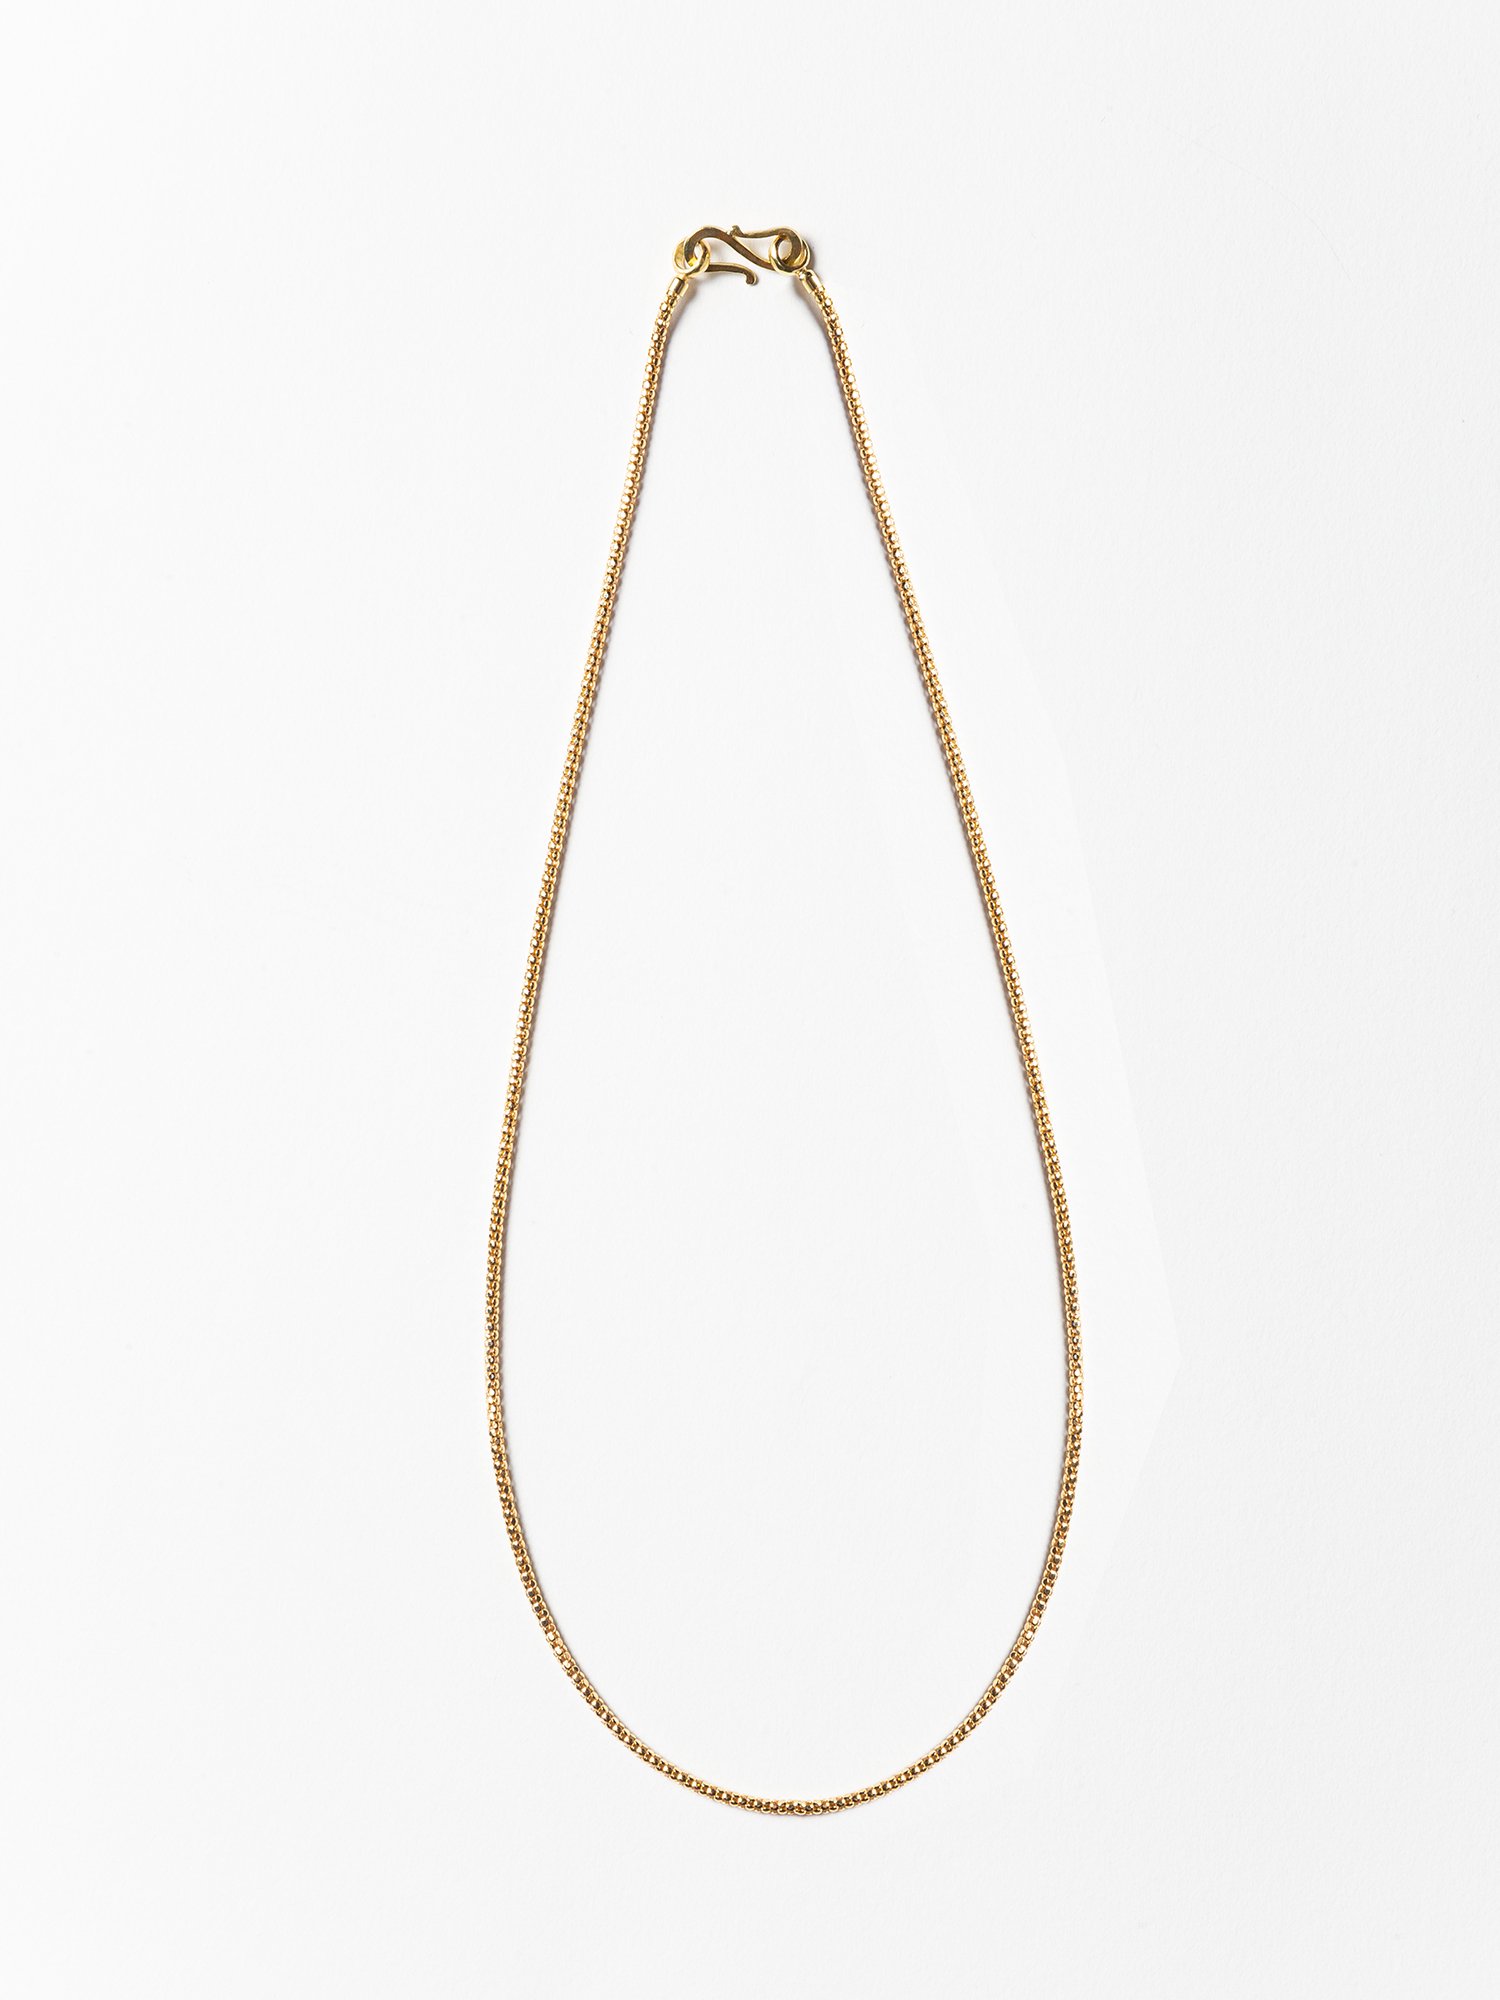 HELIOS / Persian chain necklace / S様専用 / 43cm